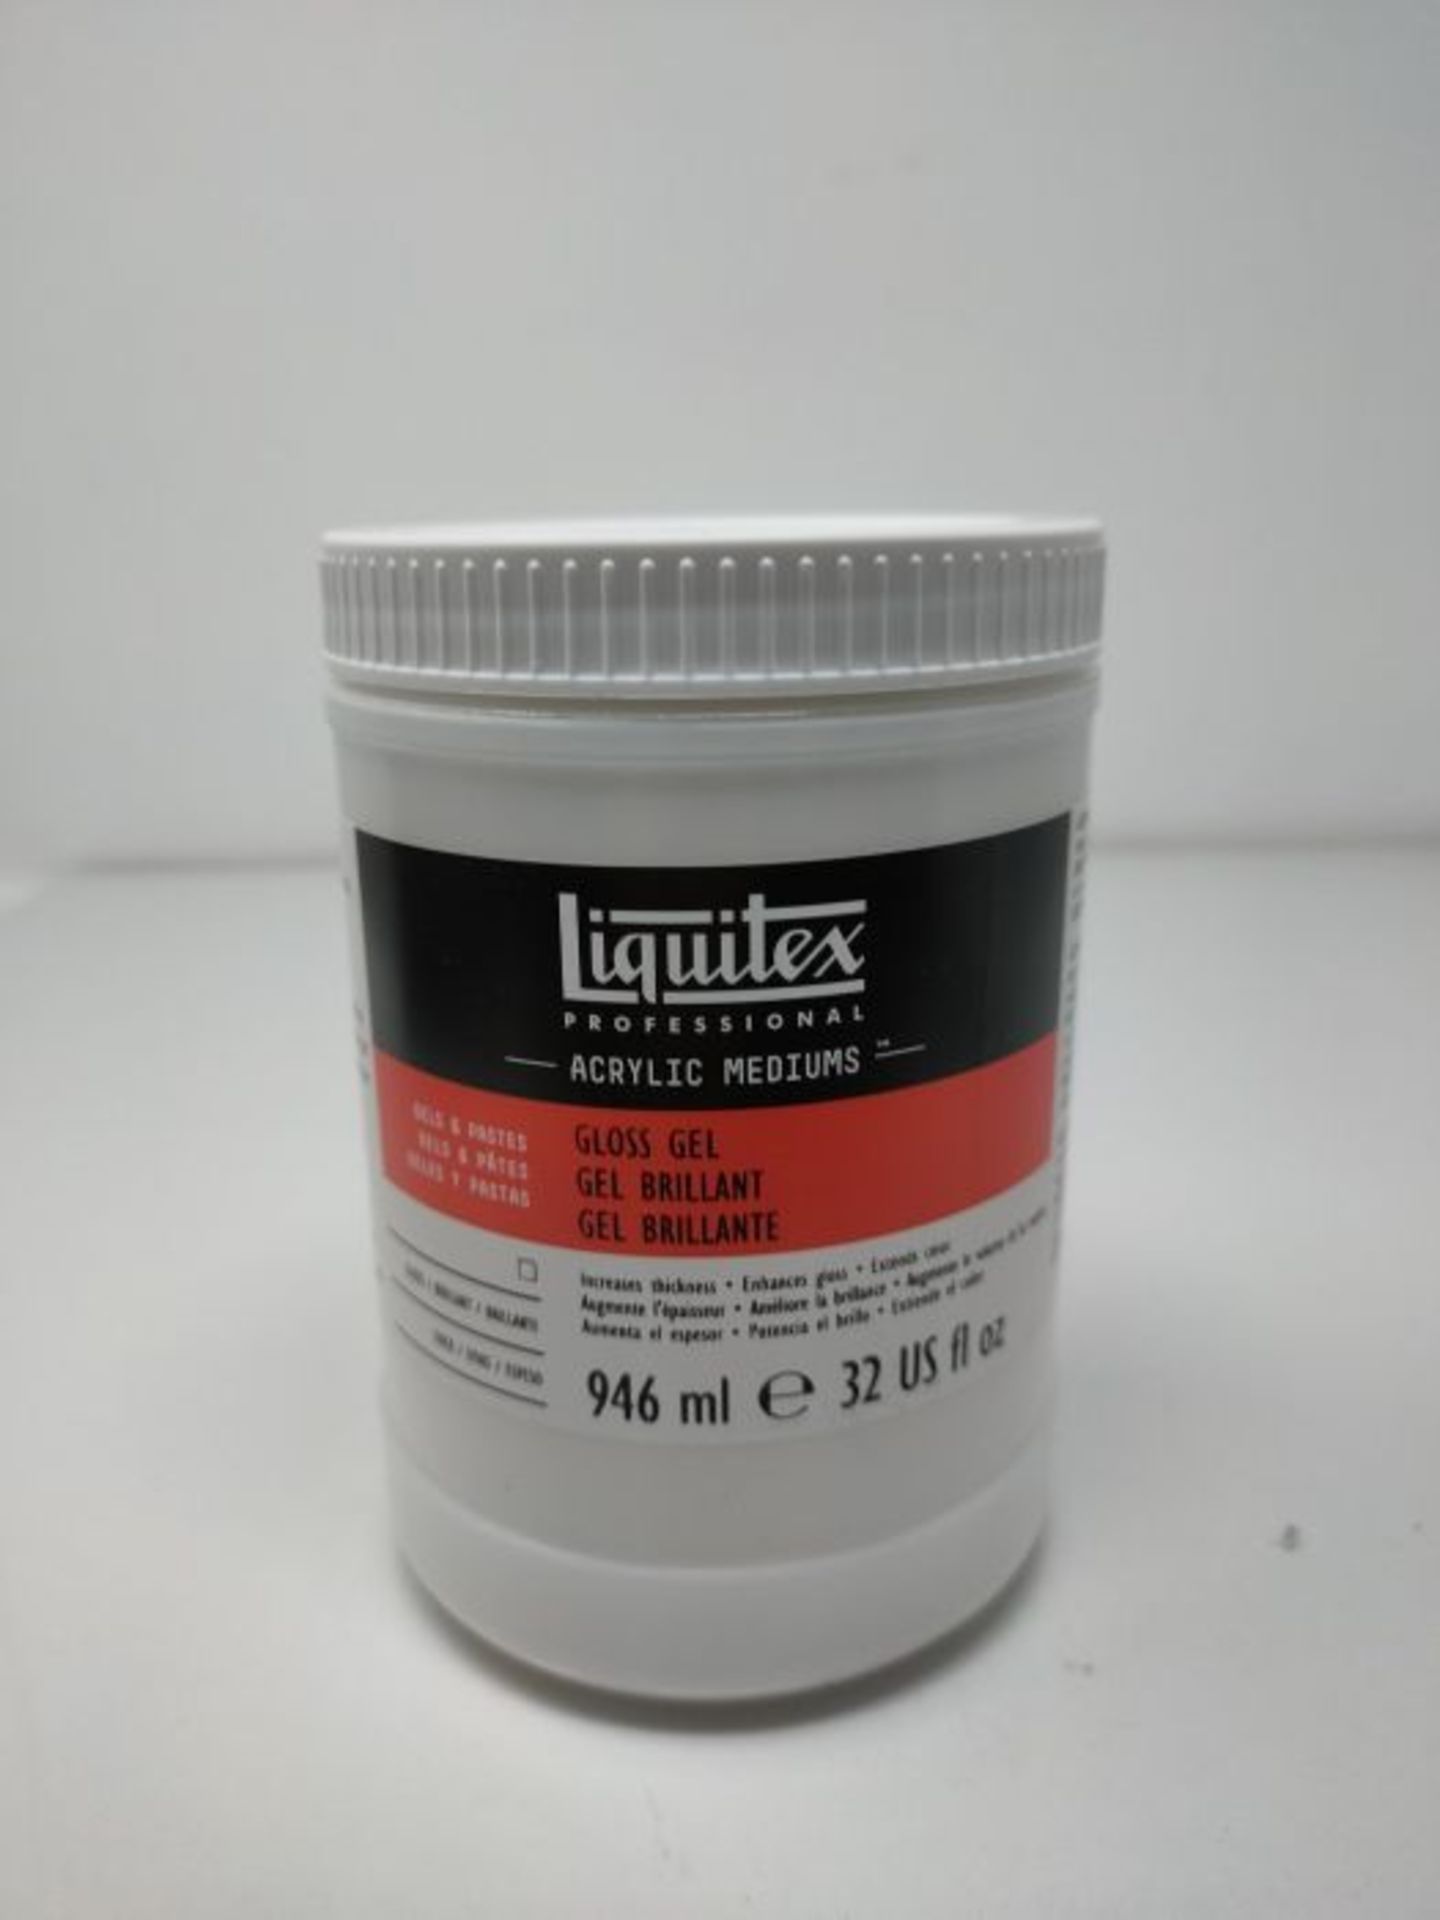 Liquitex Professional Gloss Gel Medium, 946 ml - Image 2 of 2